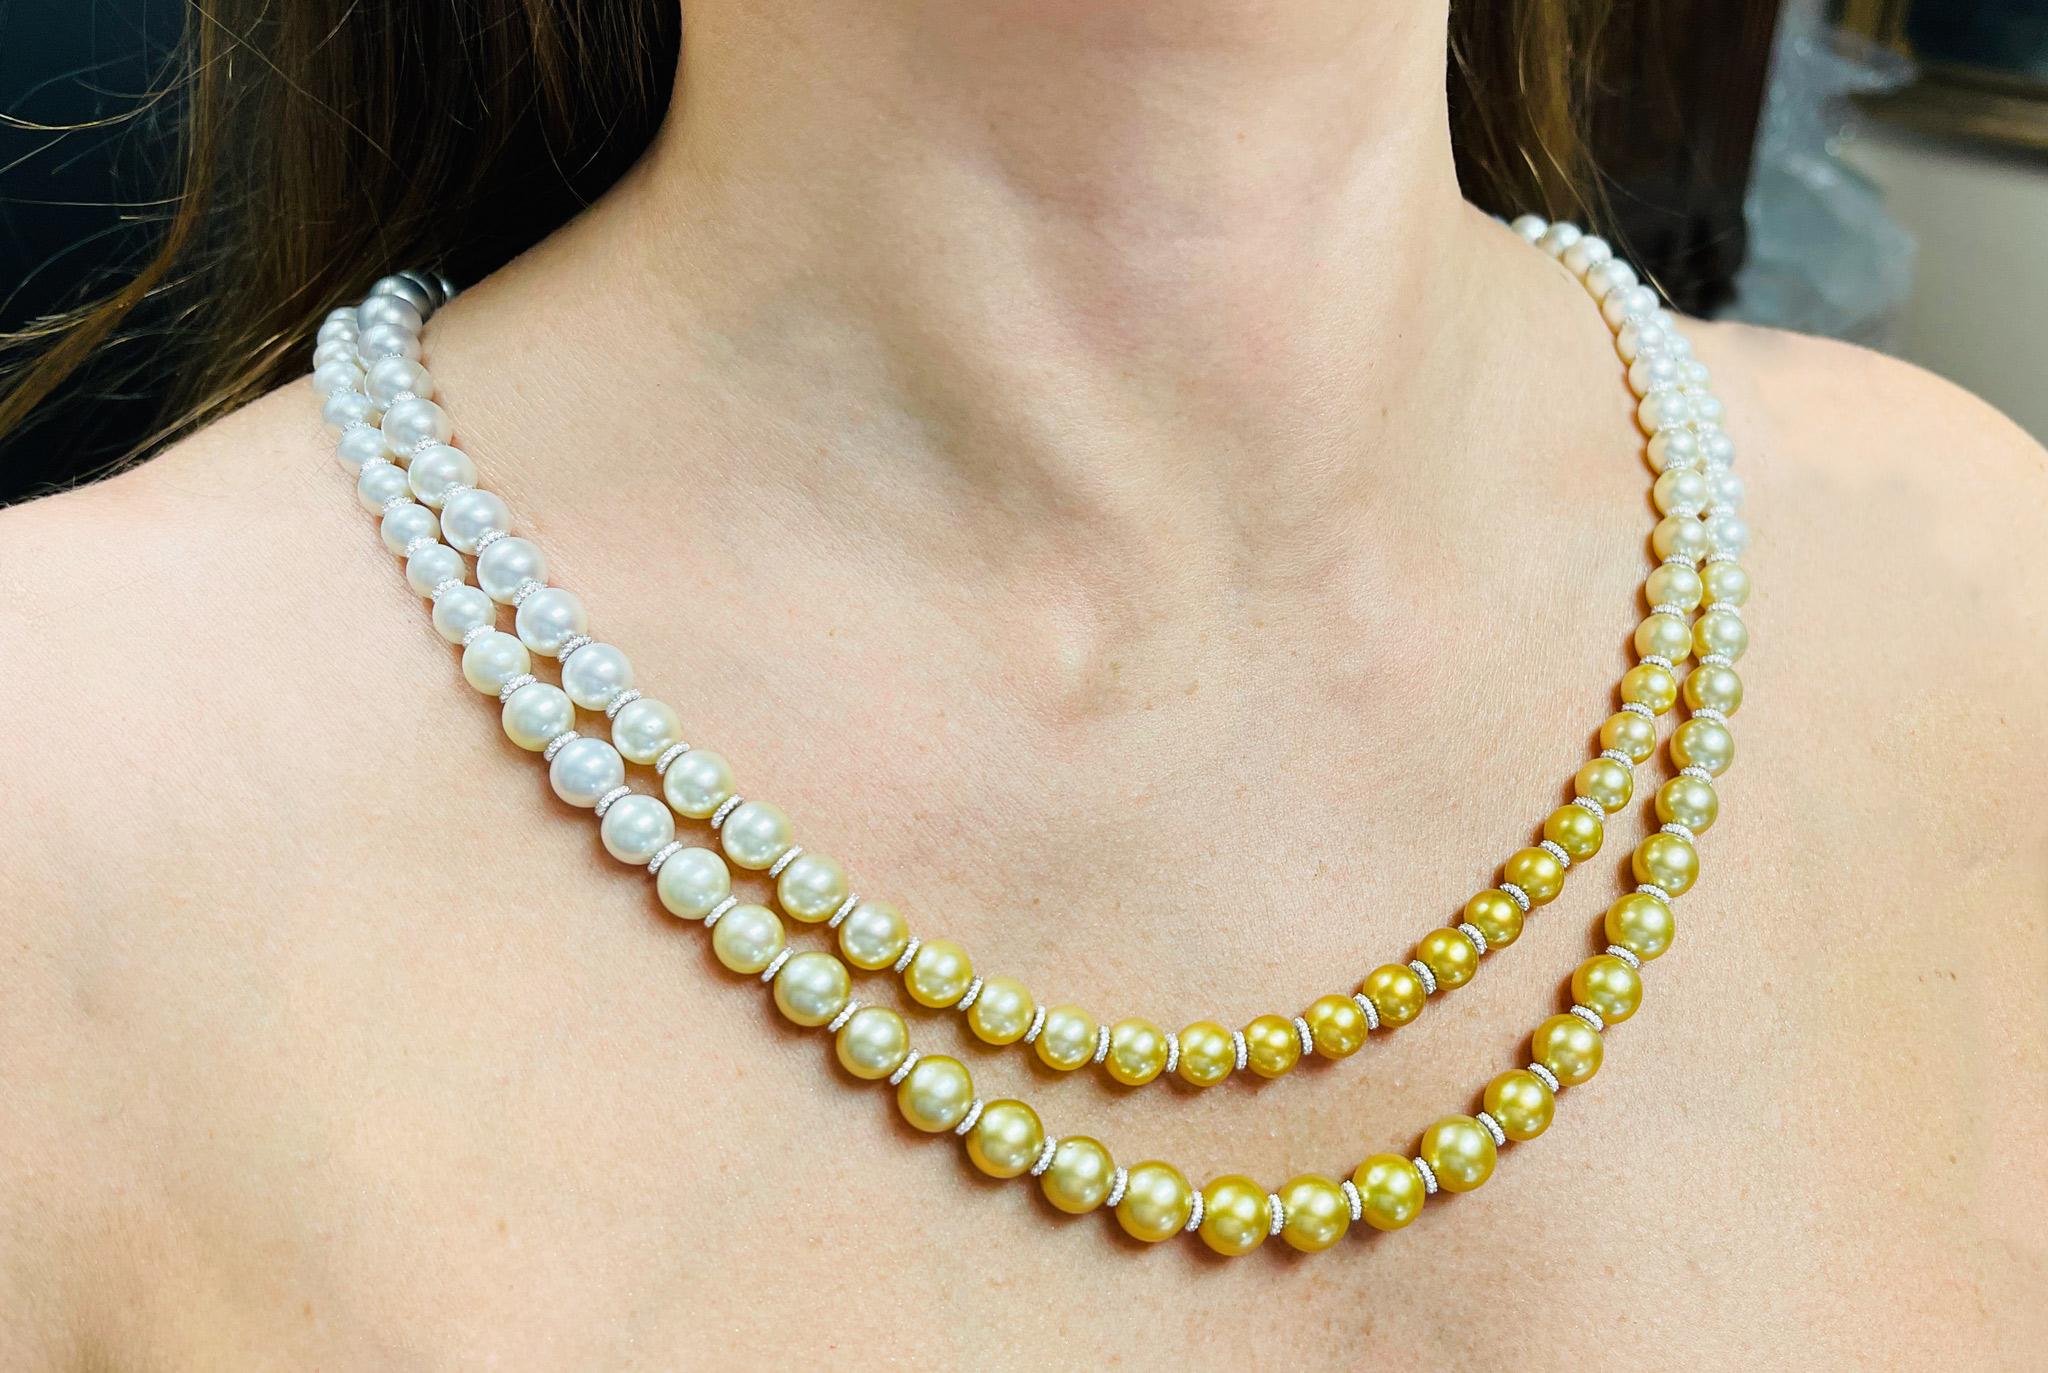 Certified Akoya Pearls = 6-10mm
Sapphire = 1.60 Carats
Diamonds = 10.50 Carats
Metal: 14K Gold